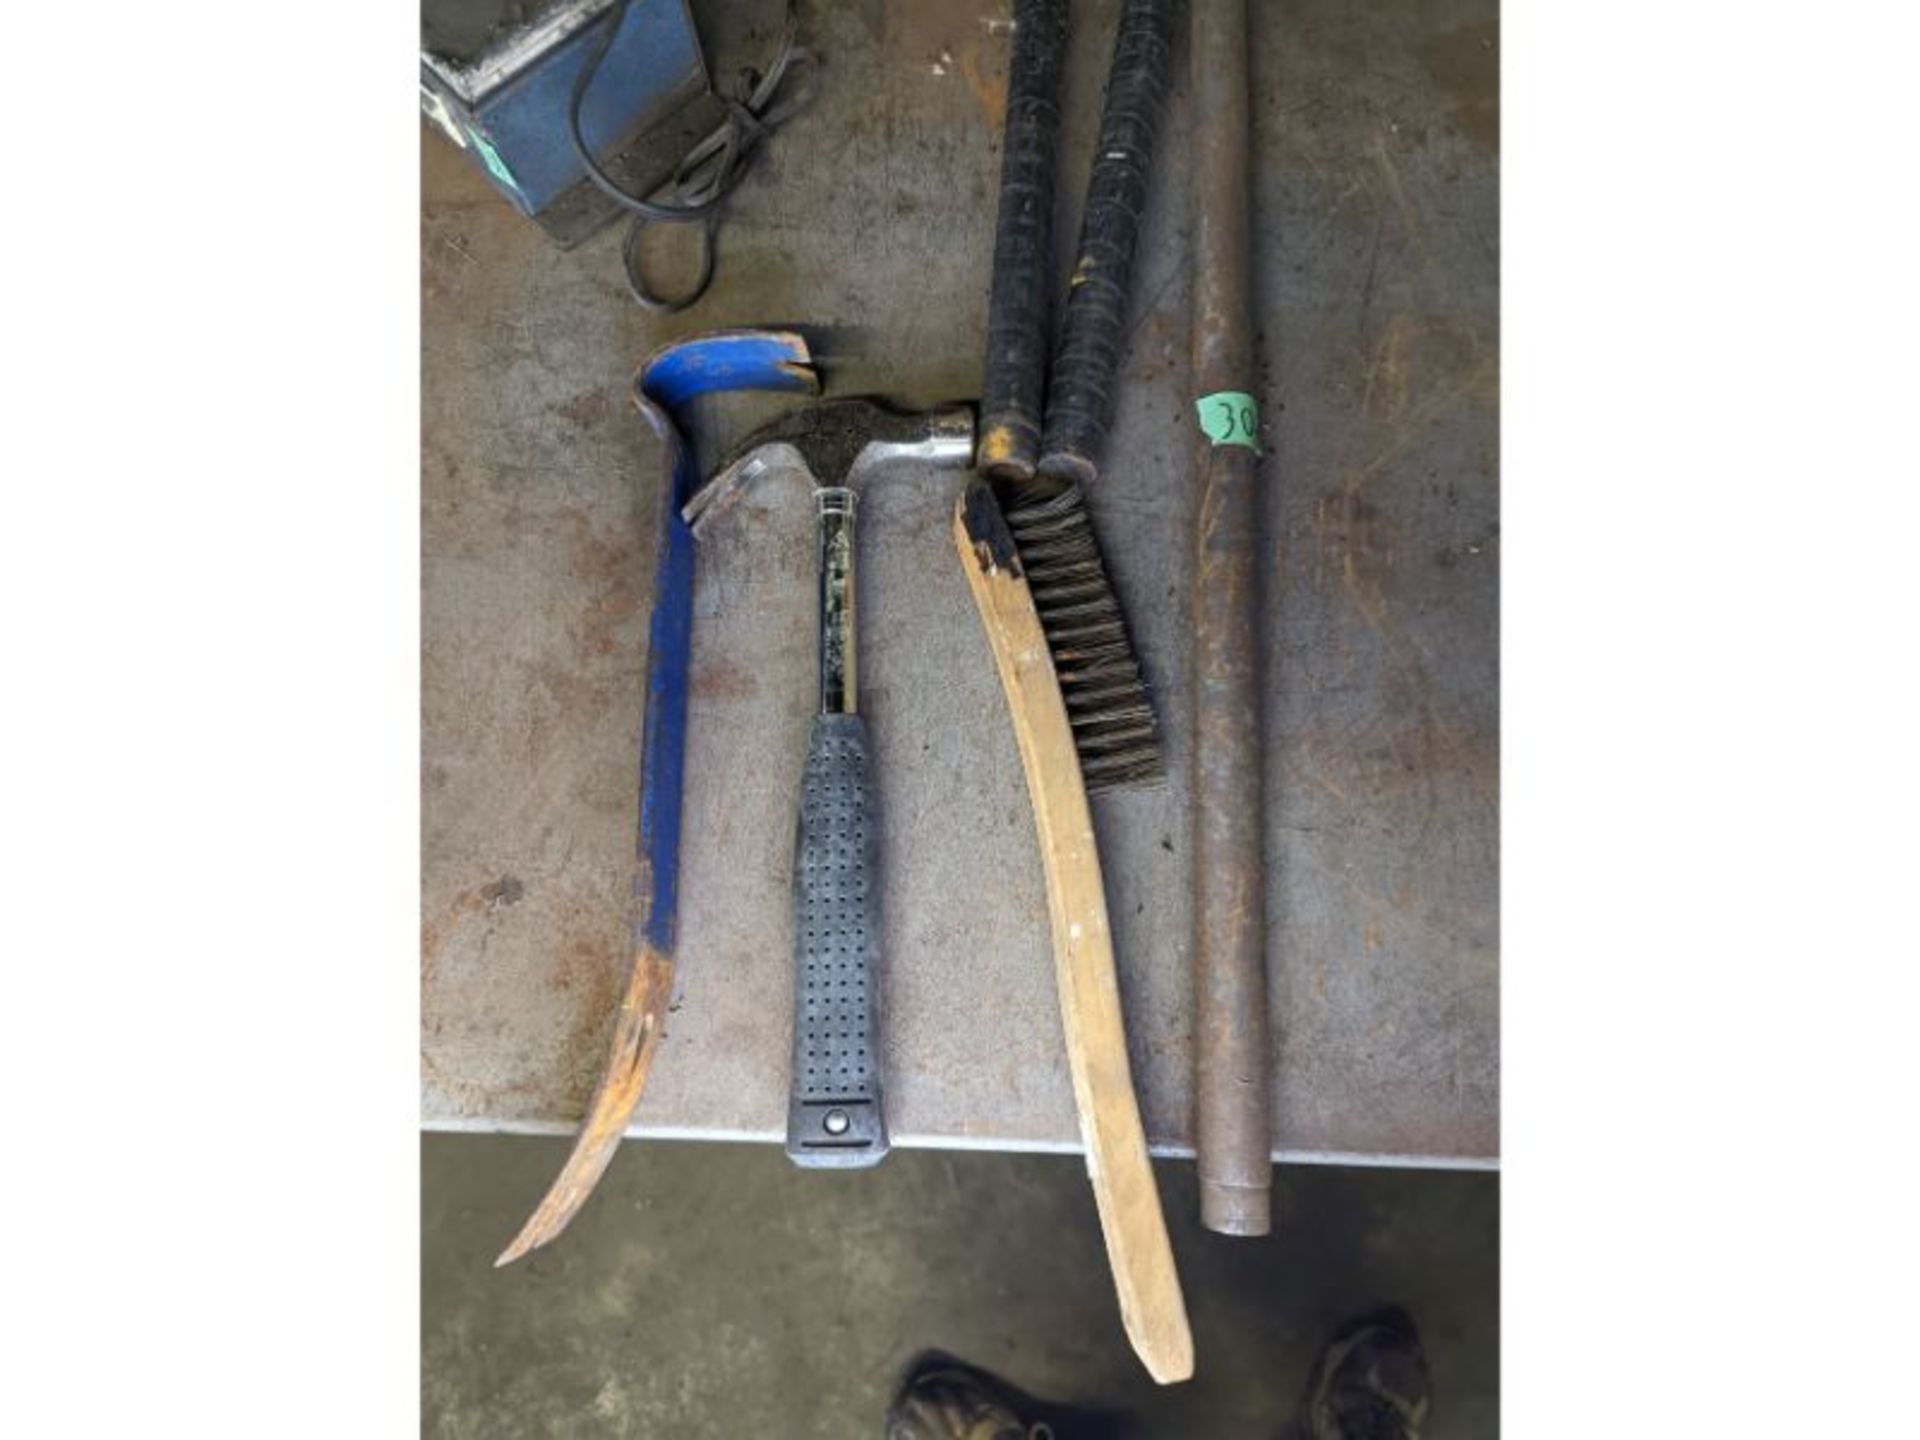 Tools Conduit Bender, Small Tubing Bender, Wire Brush, Hammer, Prybar - Image 3 of 3